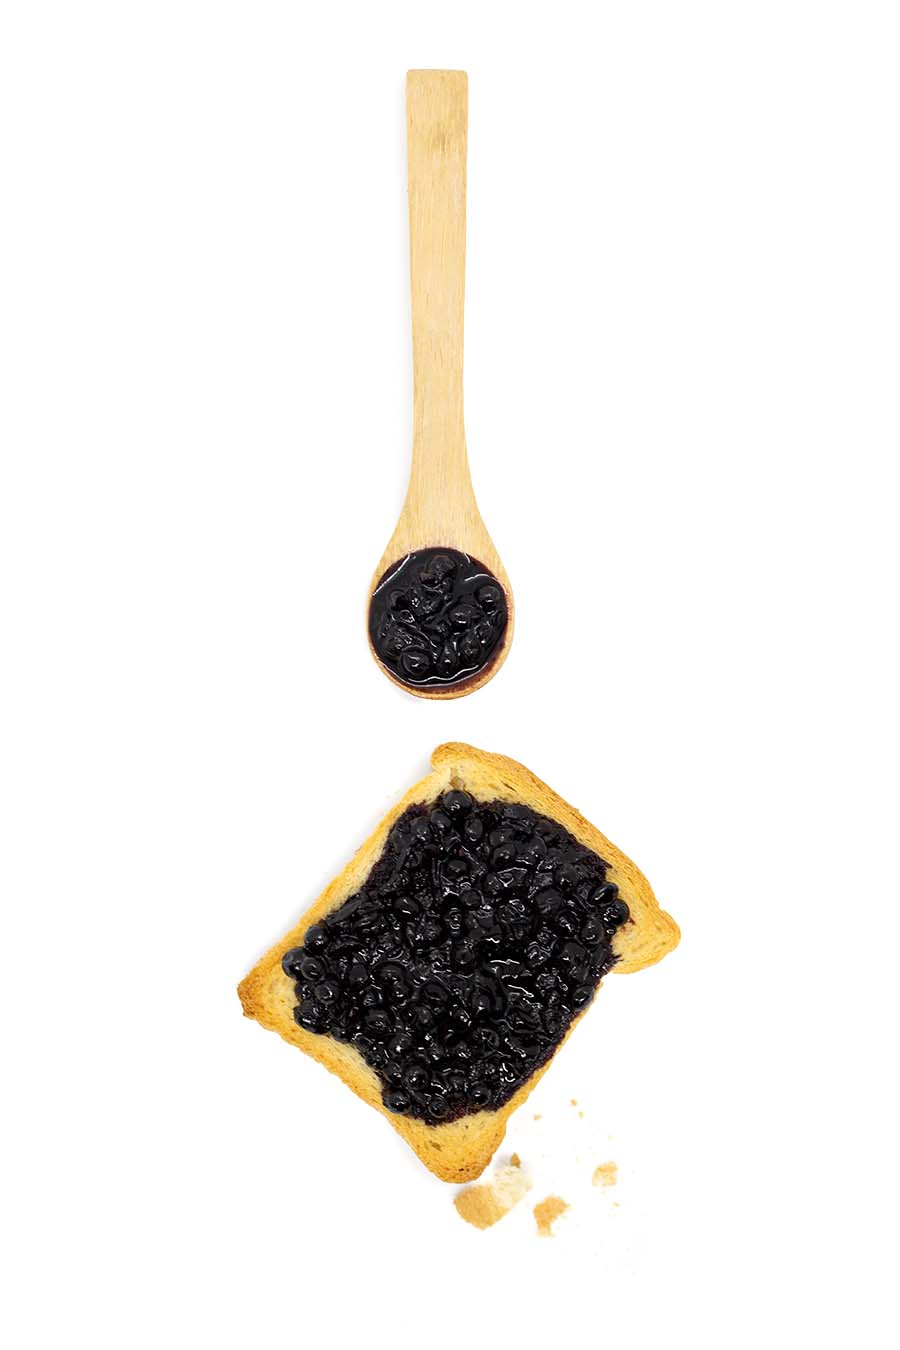 Artisanal Wild Elderberry Jam spoon toast Health from Europe